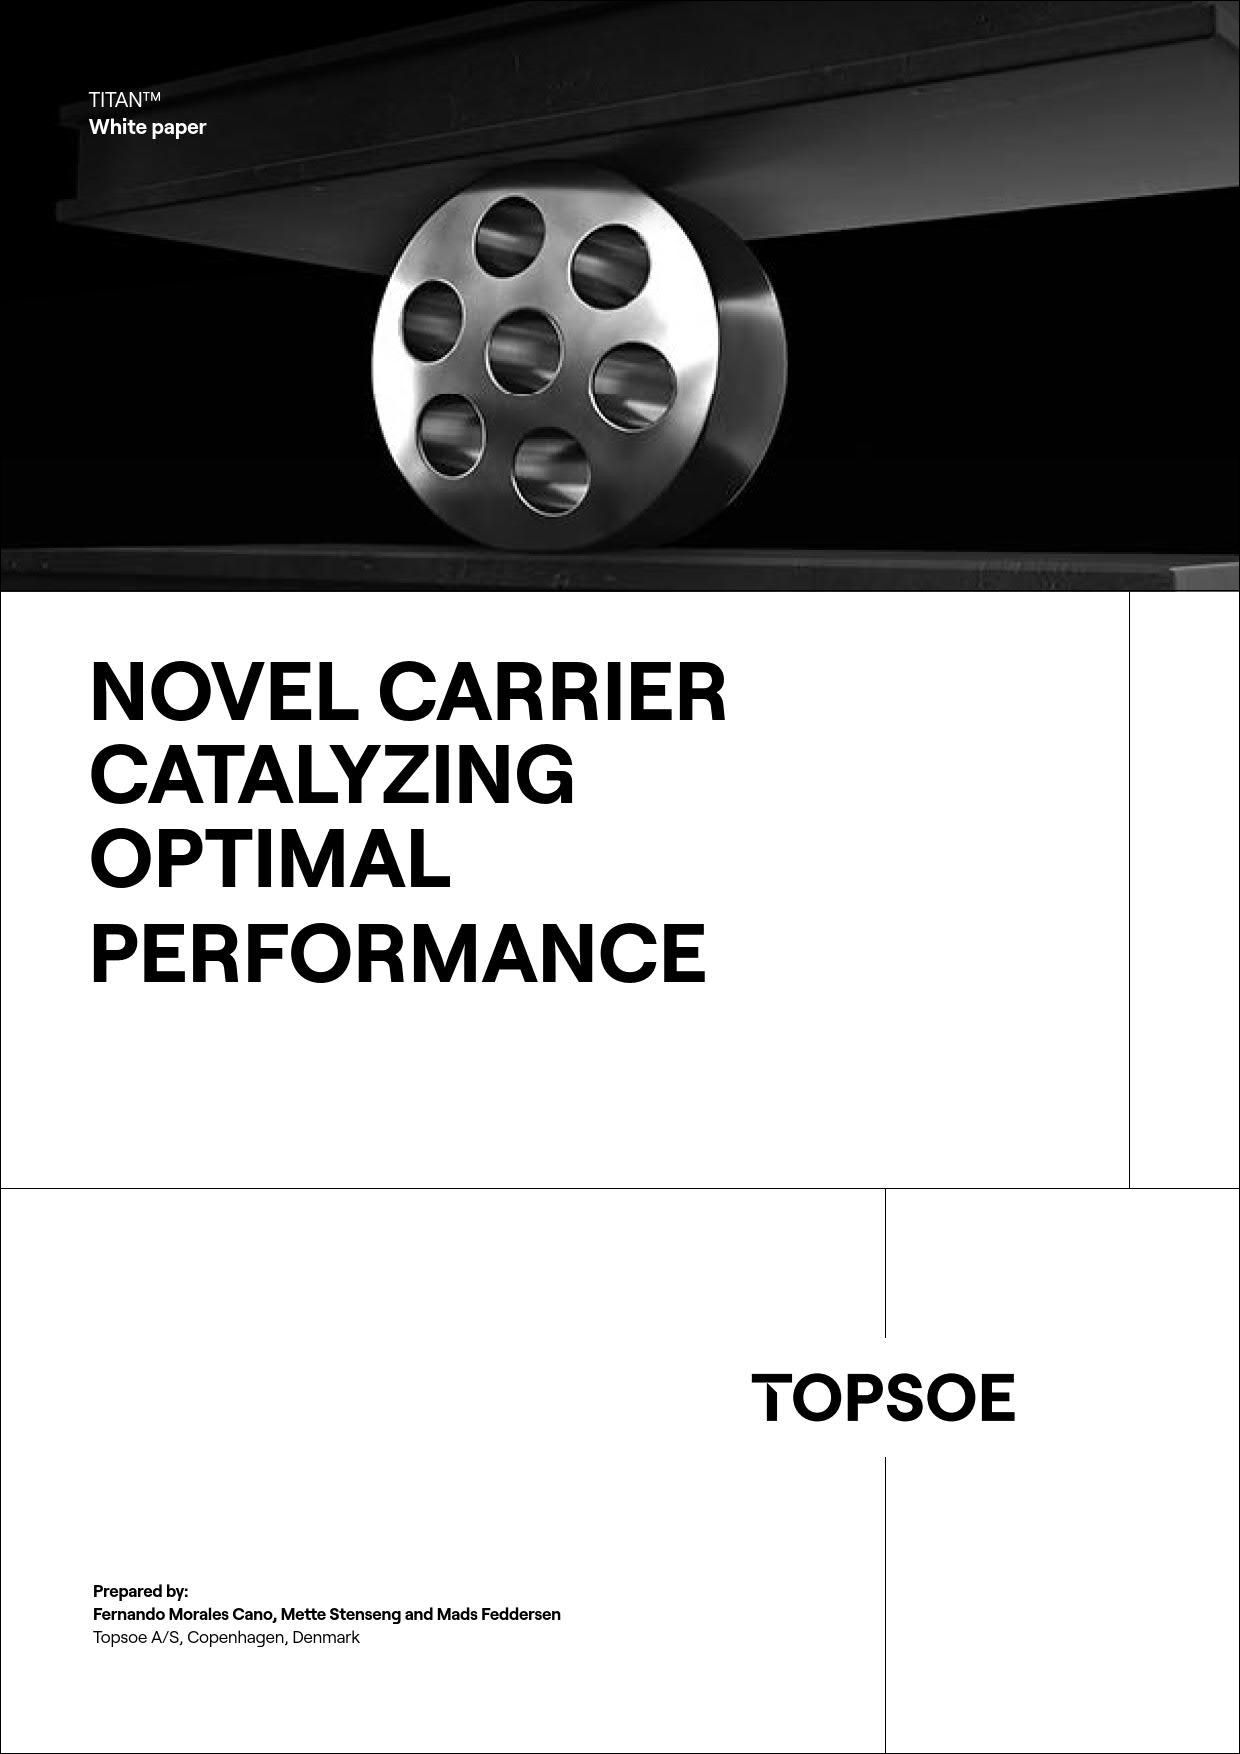 Novel carrier catalyzing optimal performance